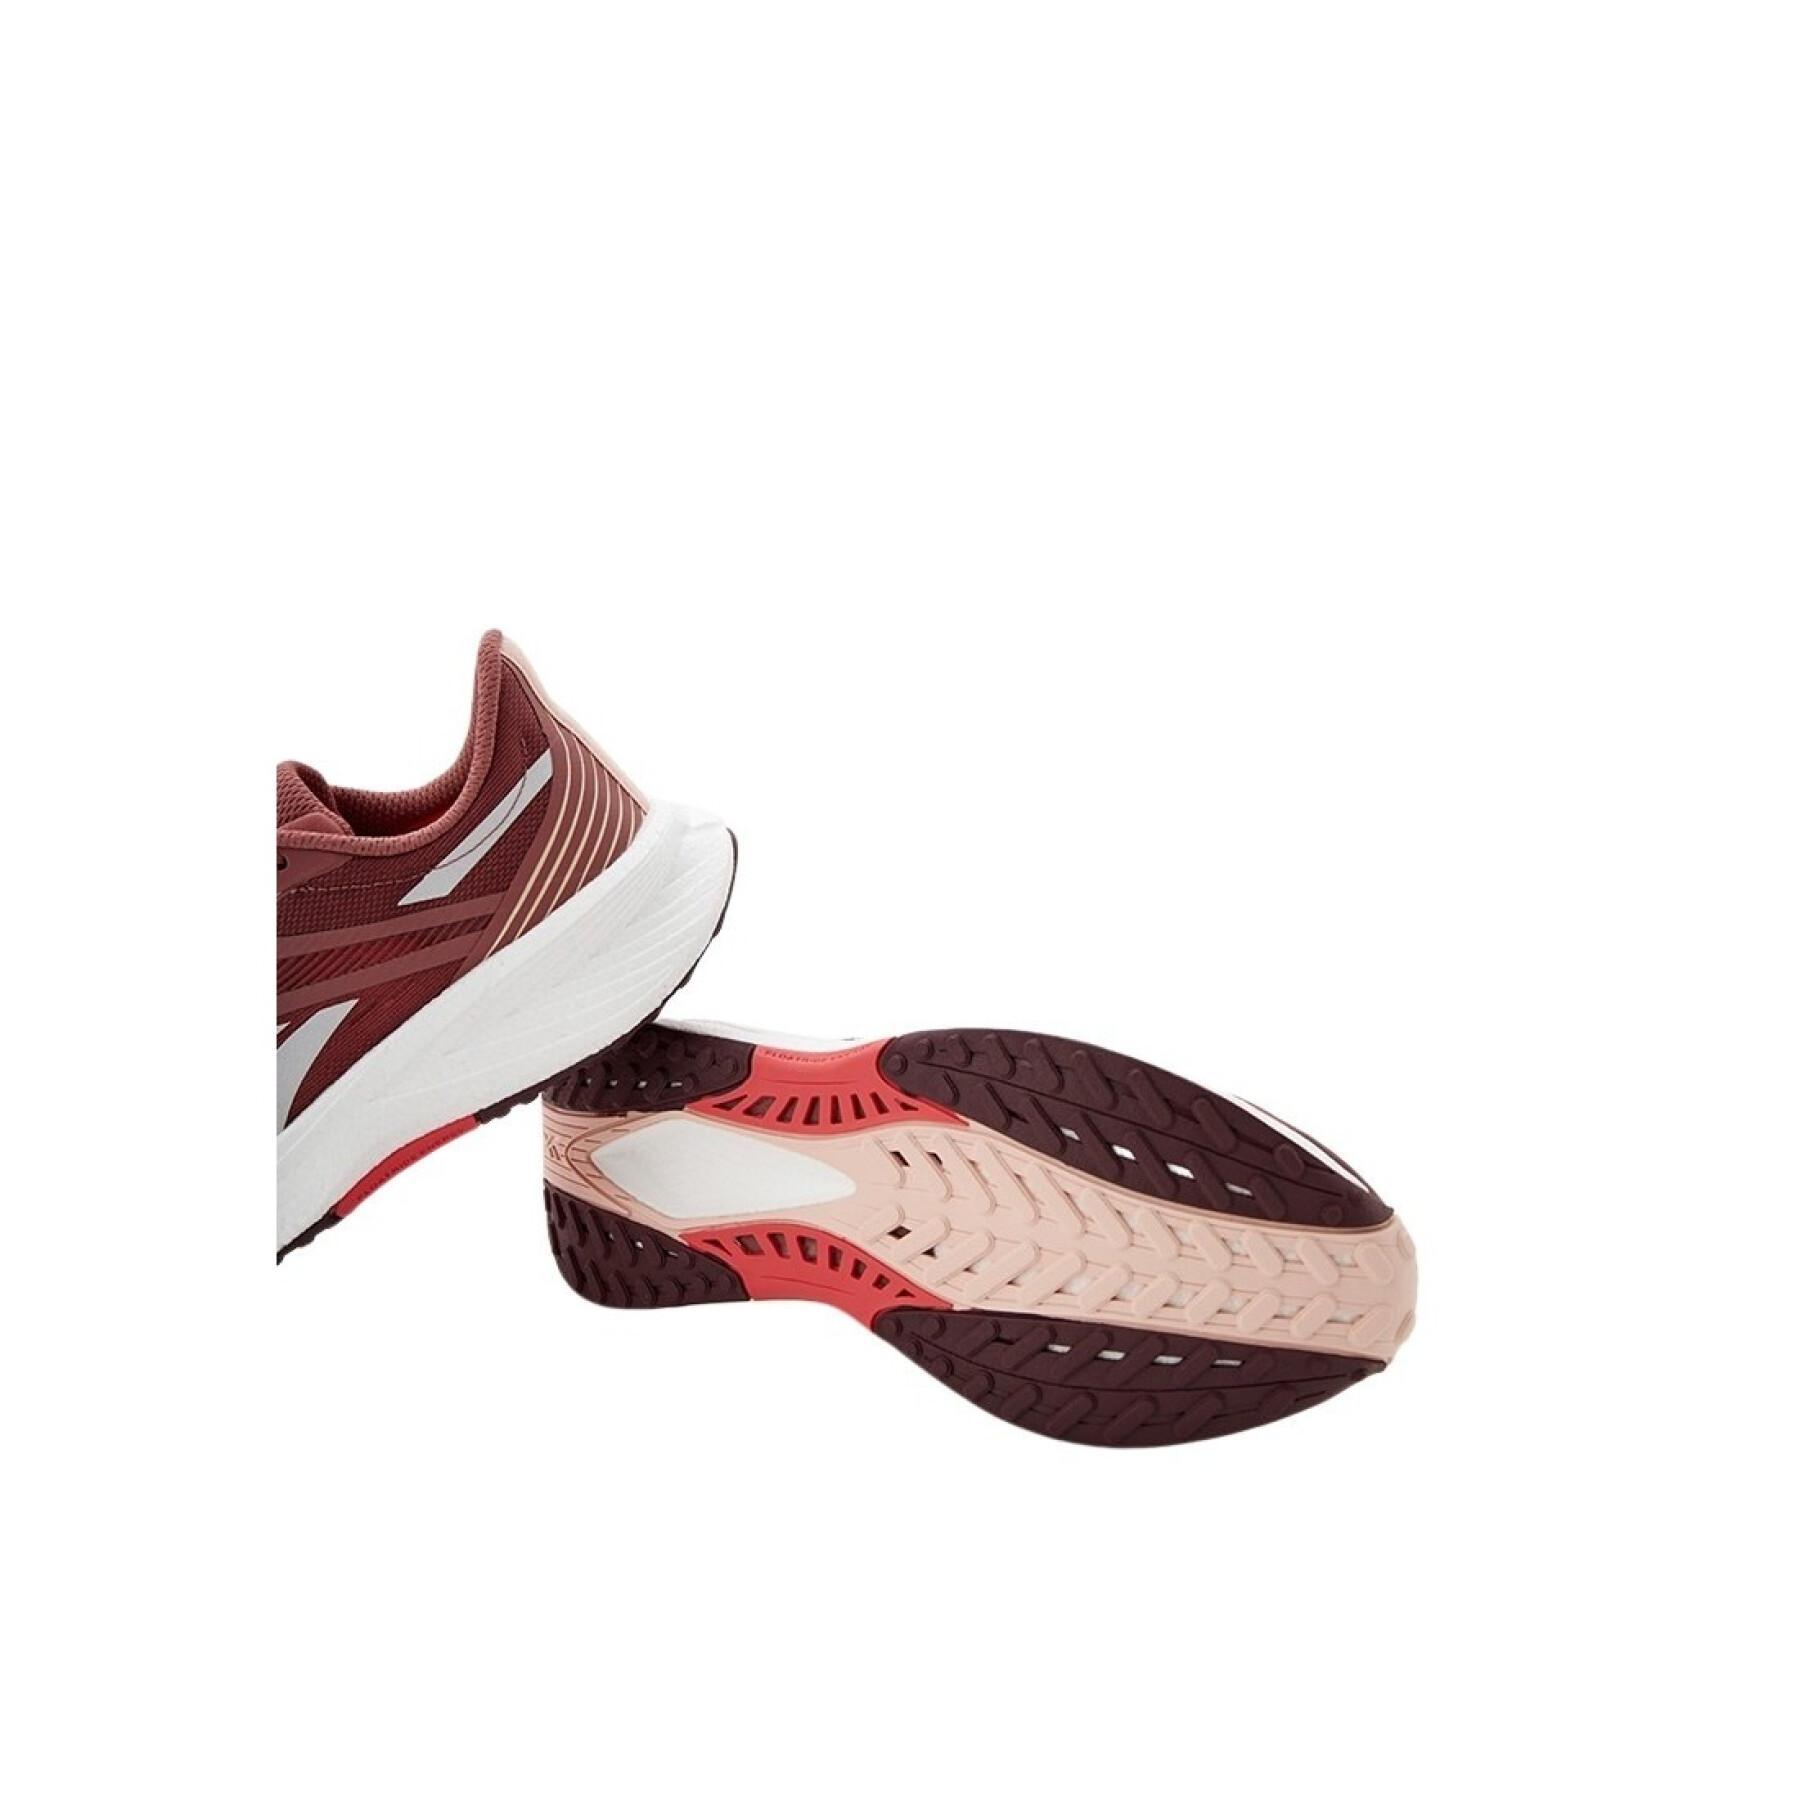 Women's running shoes Reebok Floatride Energy 5